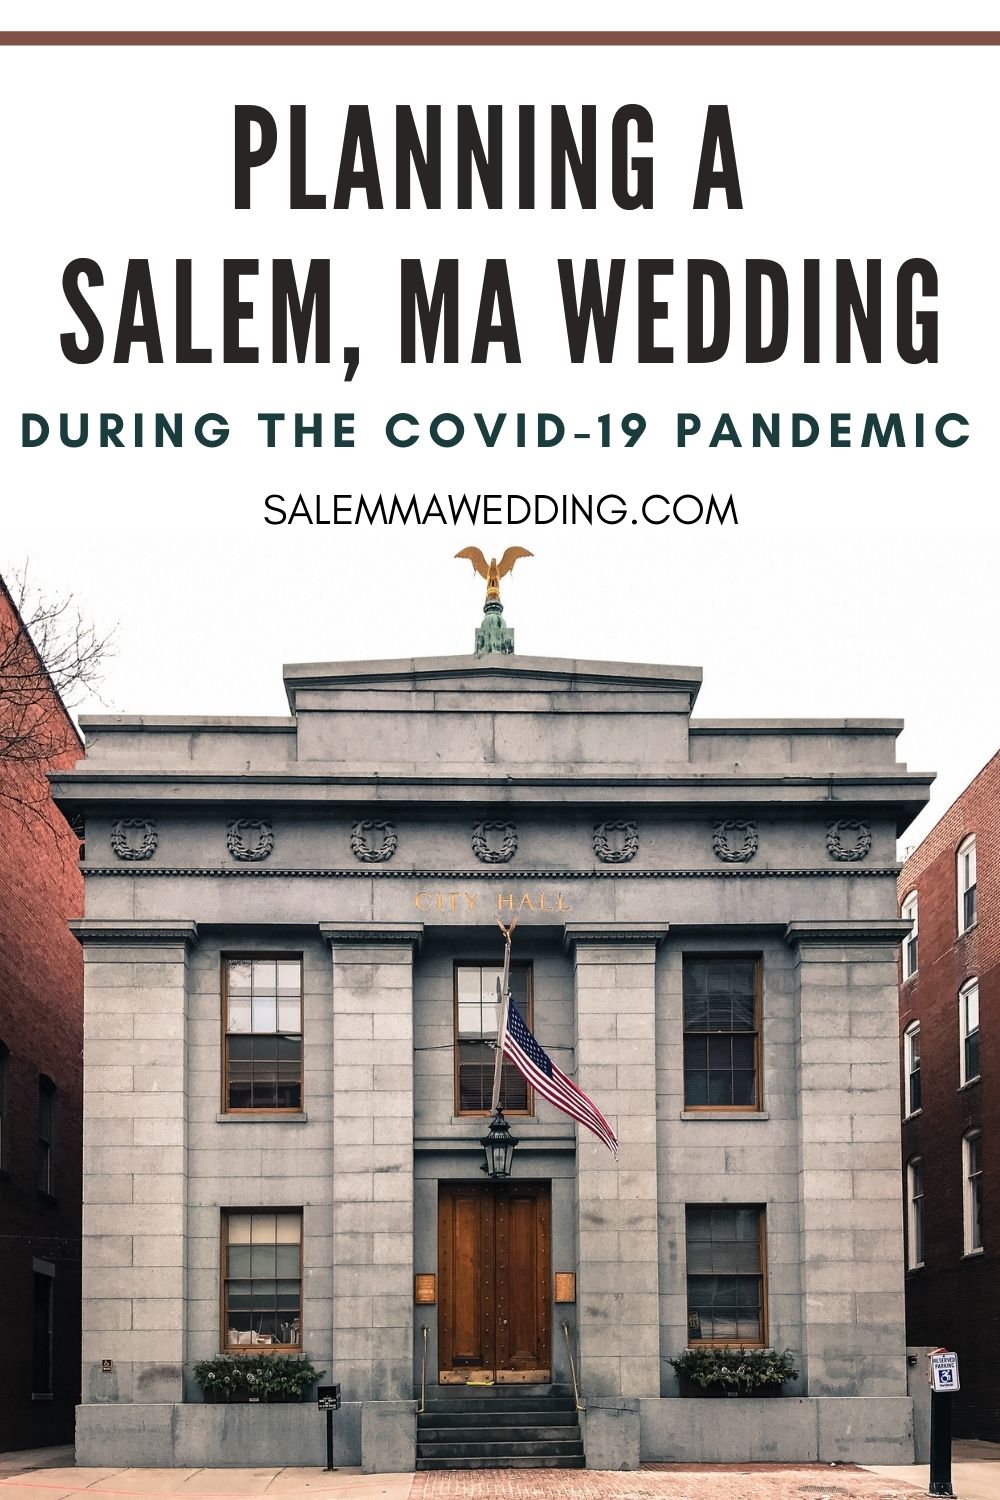 salem ma wedding, planning a salem ma wedding during the covid-19 pandemic